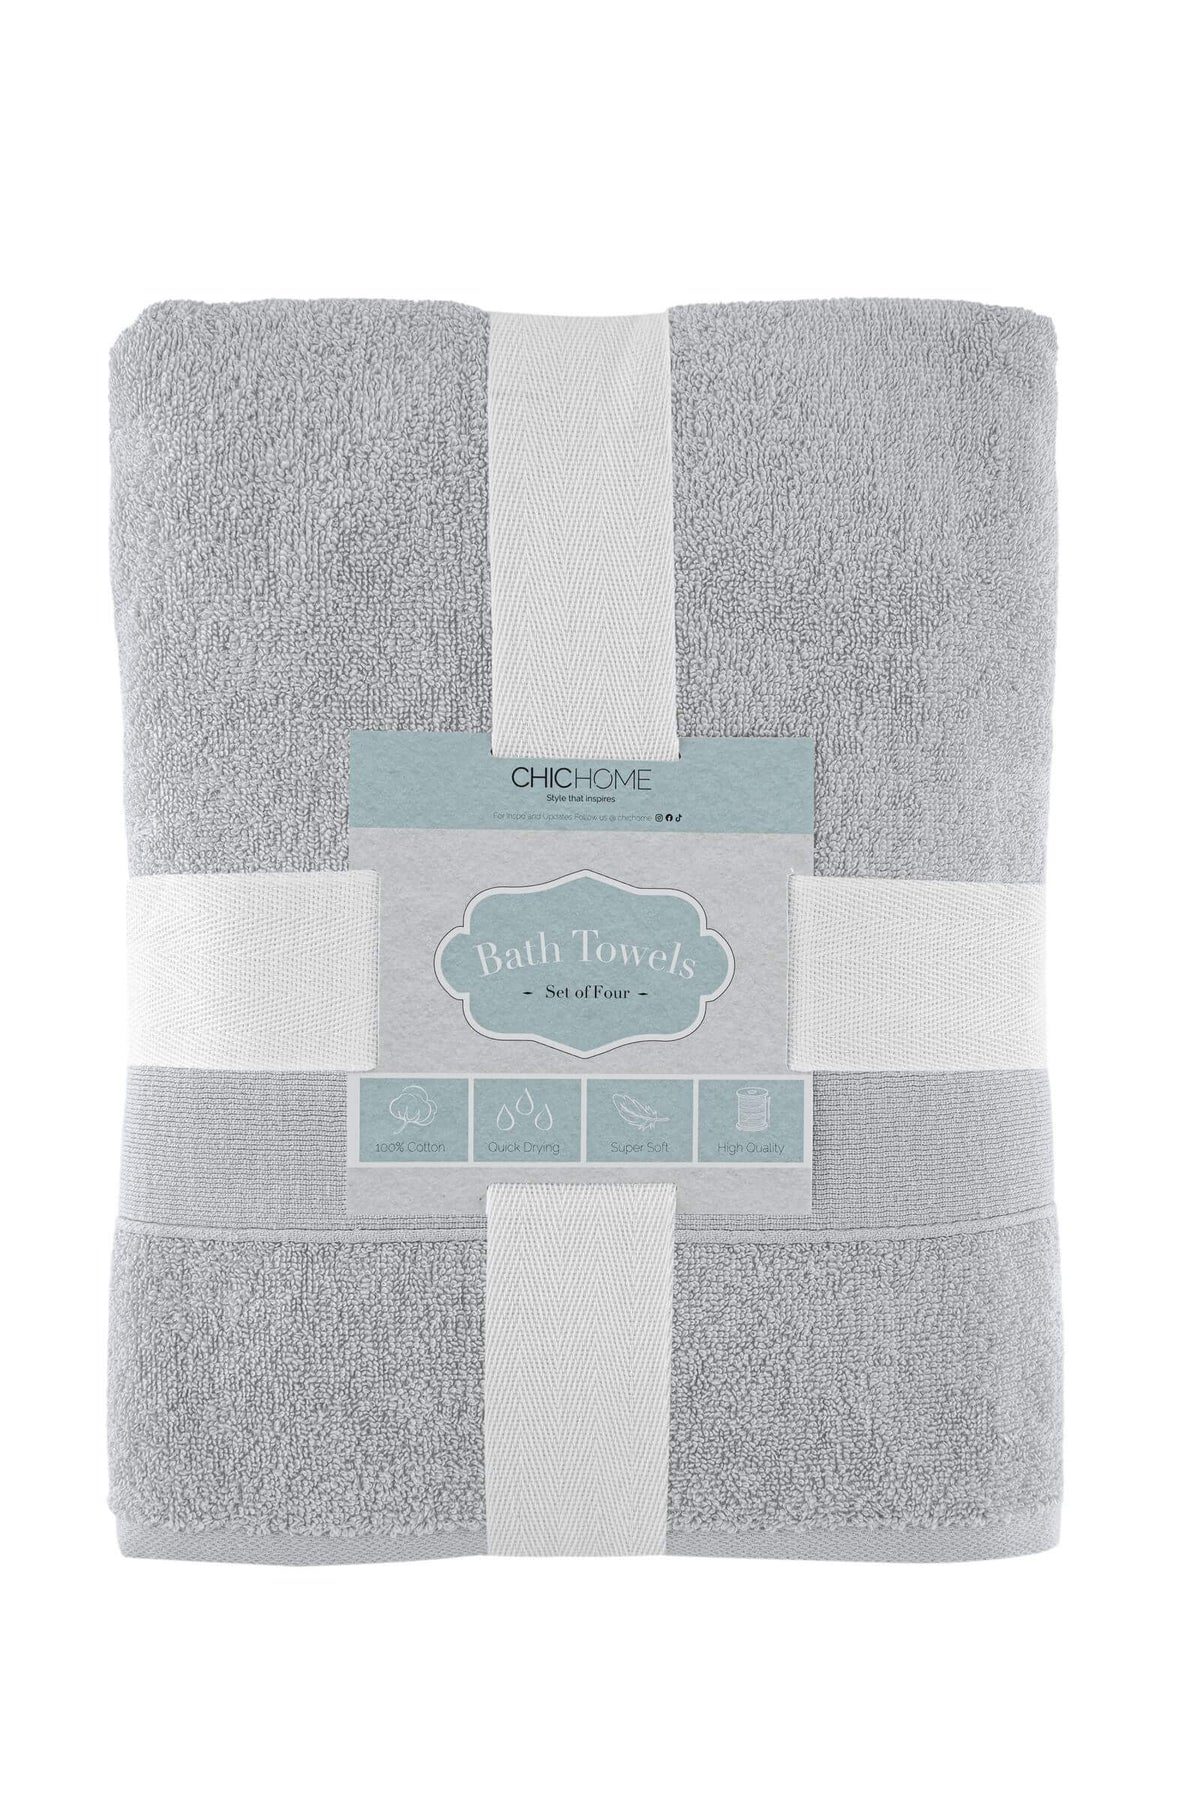 Chic Home Dobby Border Turkish Cotton 4 Piece Bath Towel Set-Grey